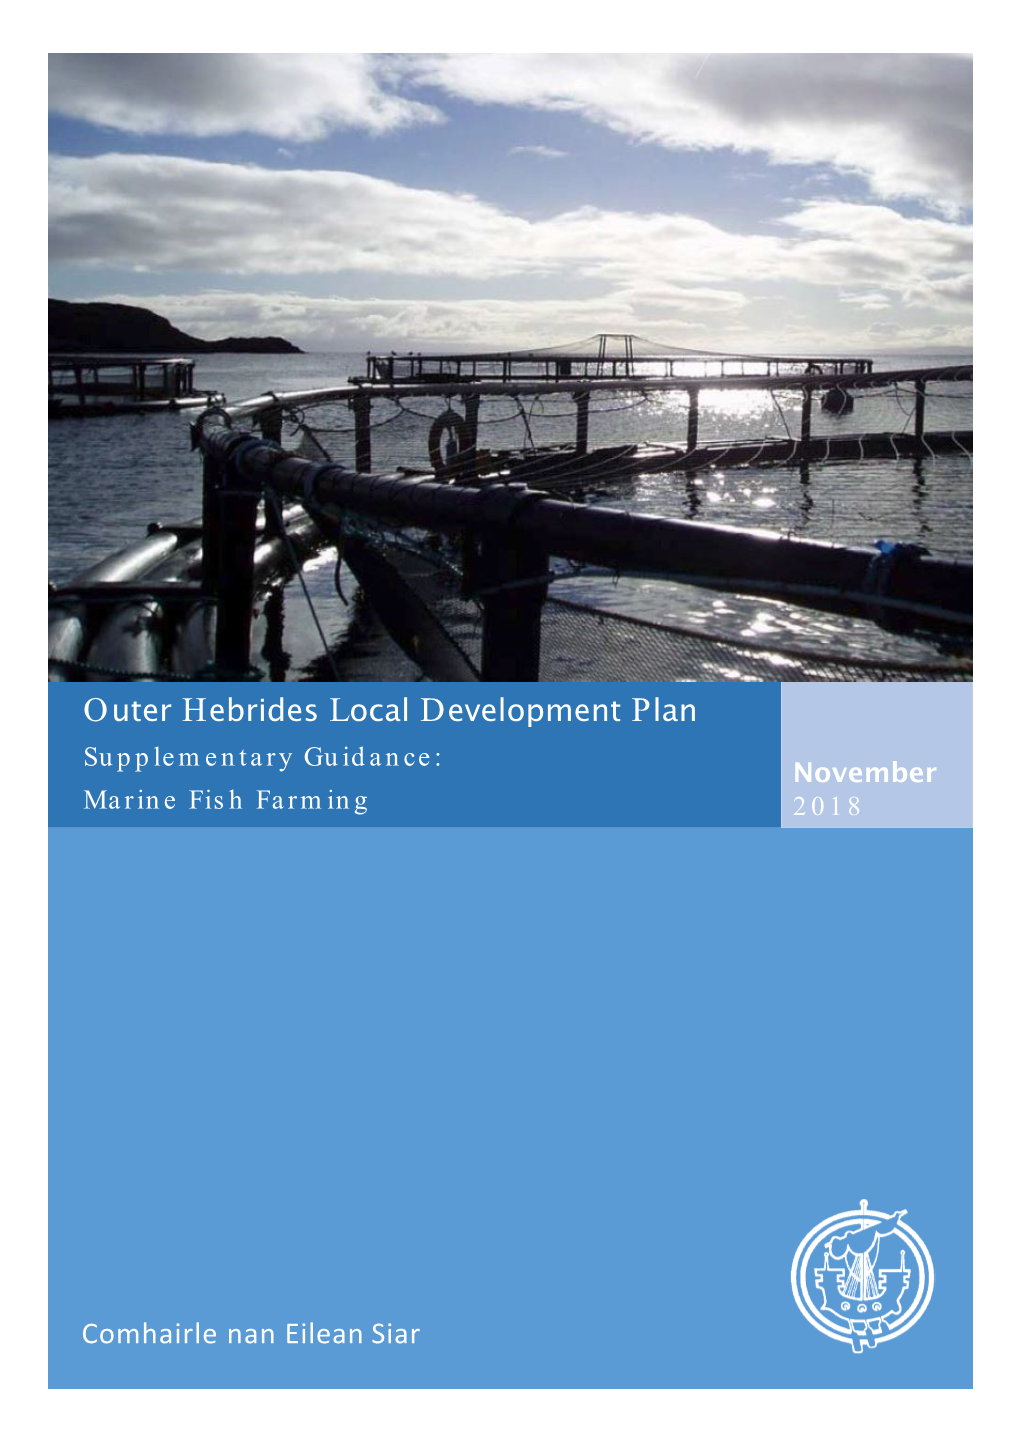 Outer Hebrides Local Development Plan Supplementary Guidance: November Marine Fish Farming 2018